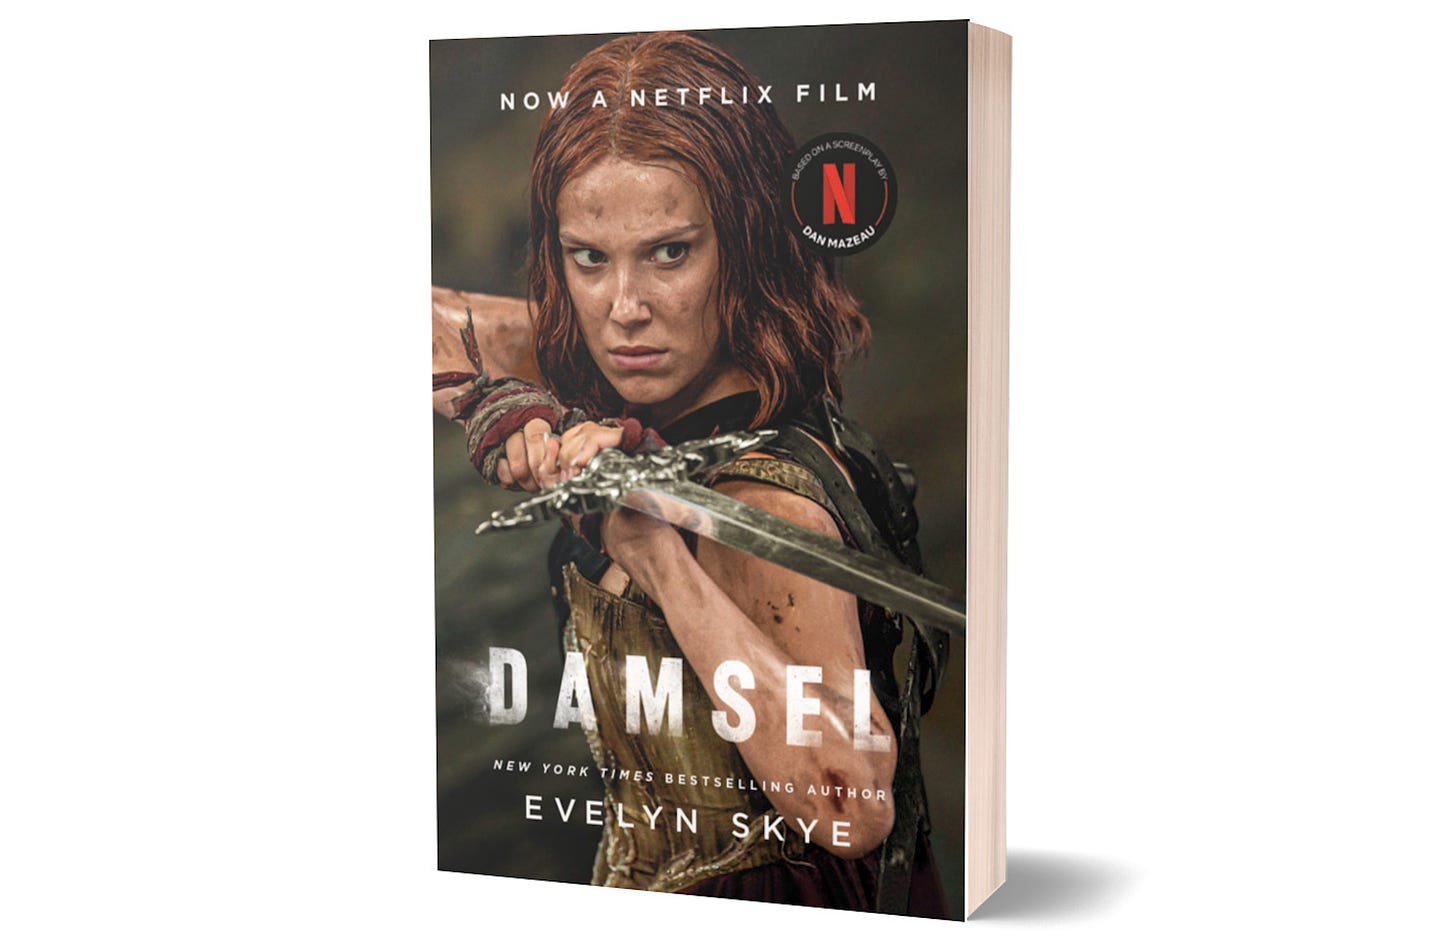 Damsel the novel by Evelyn Skye